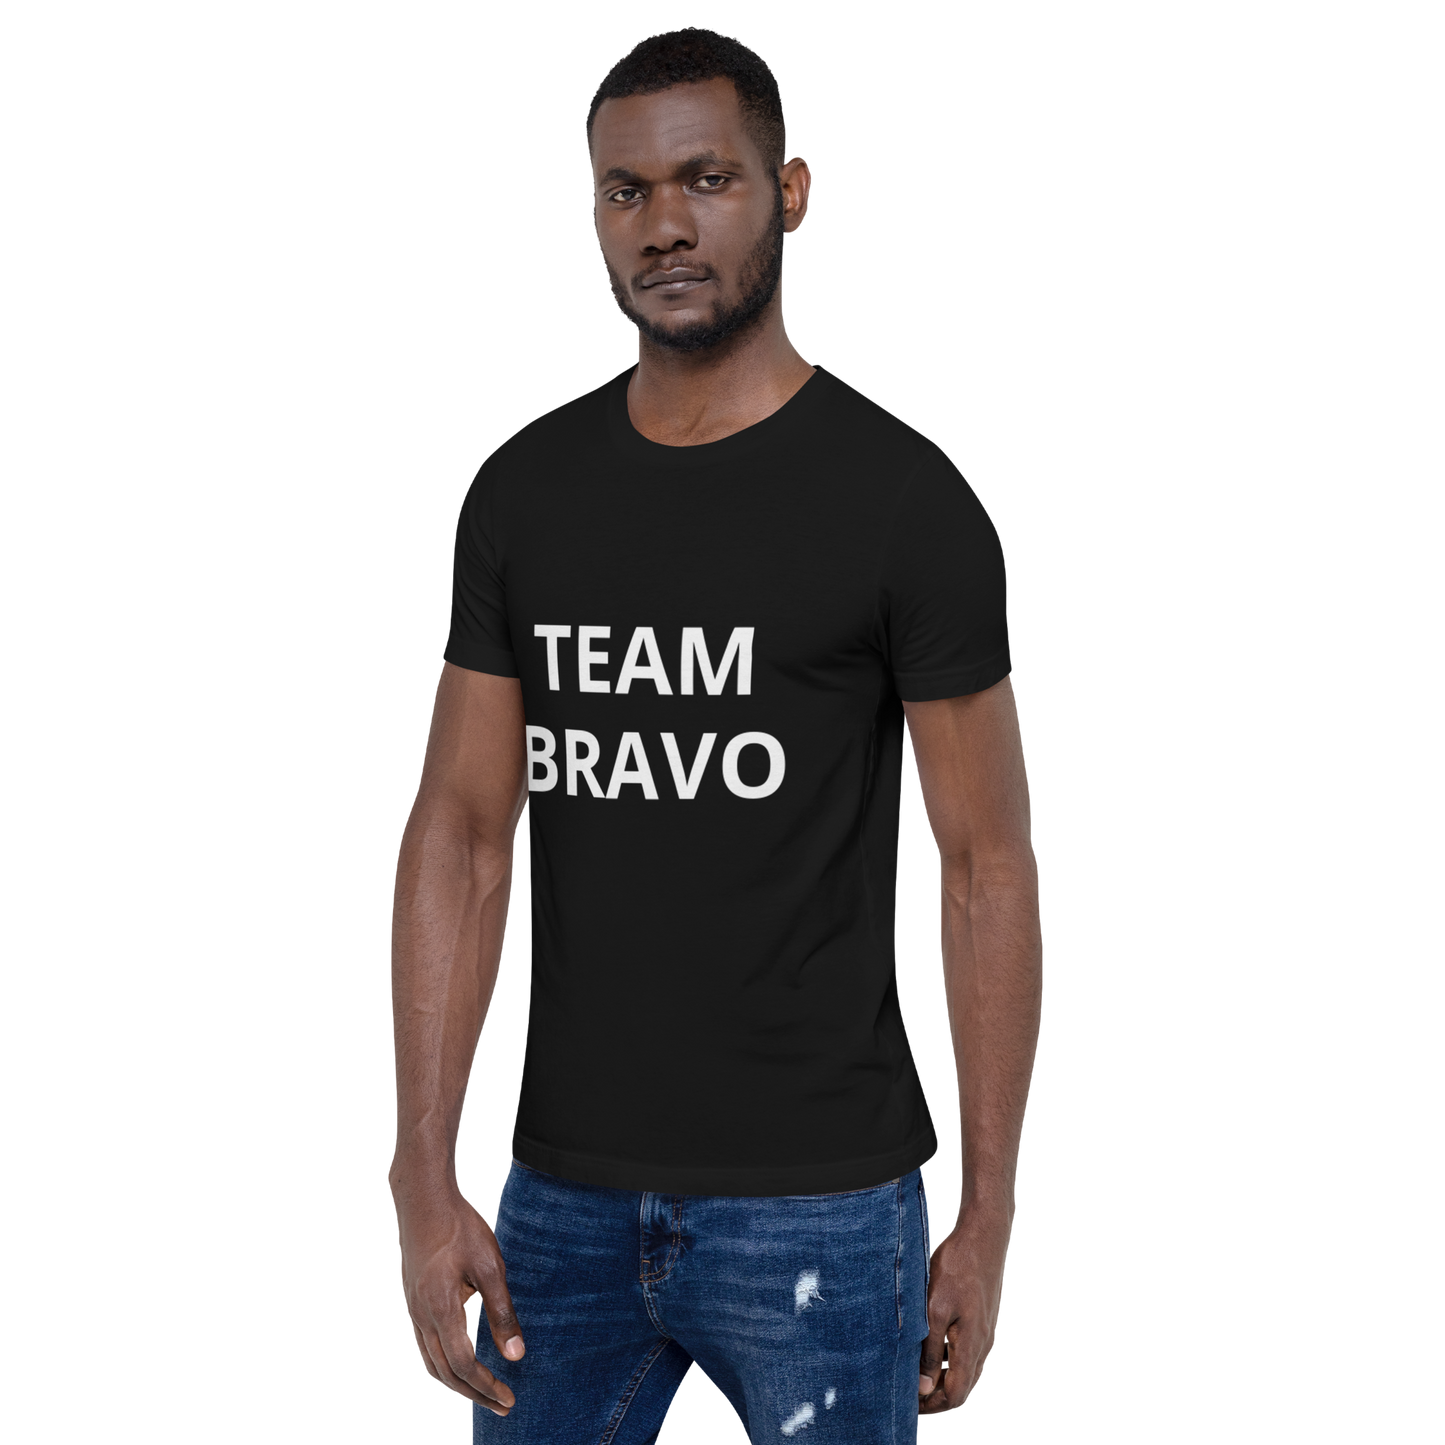 Team Bravo Promo Shirt Black & White with QR Code